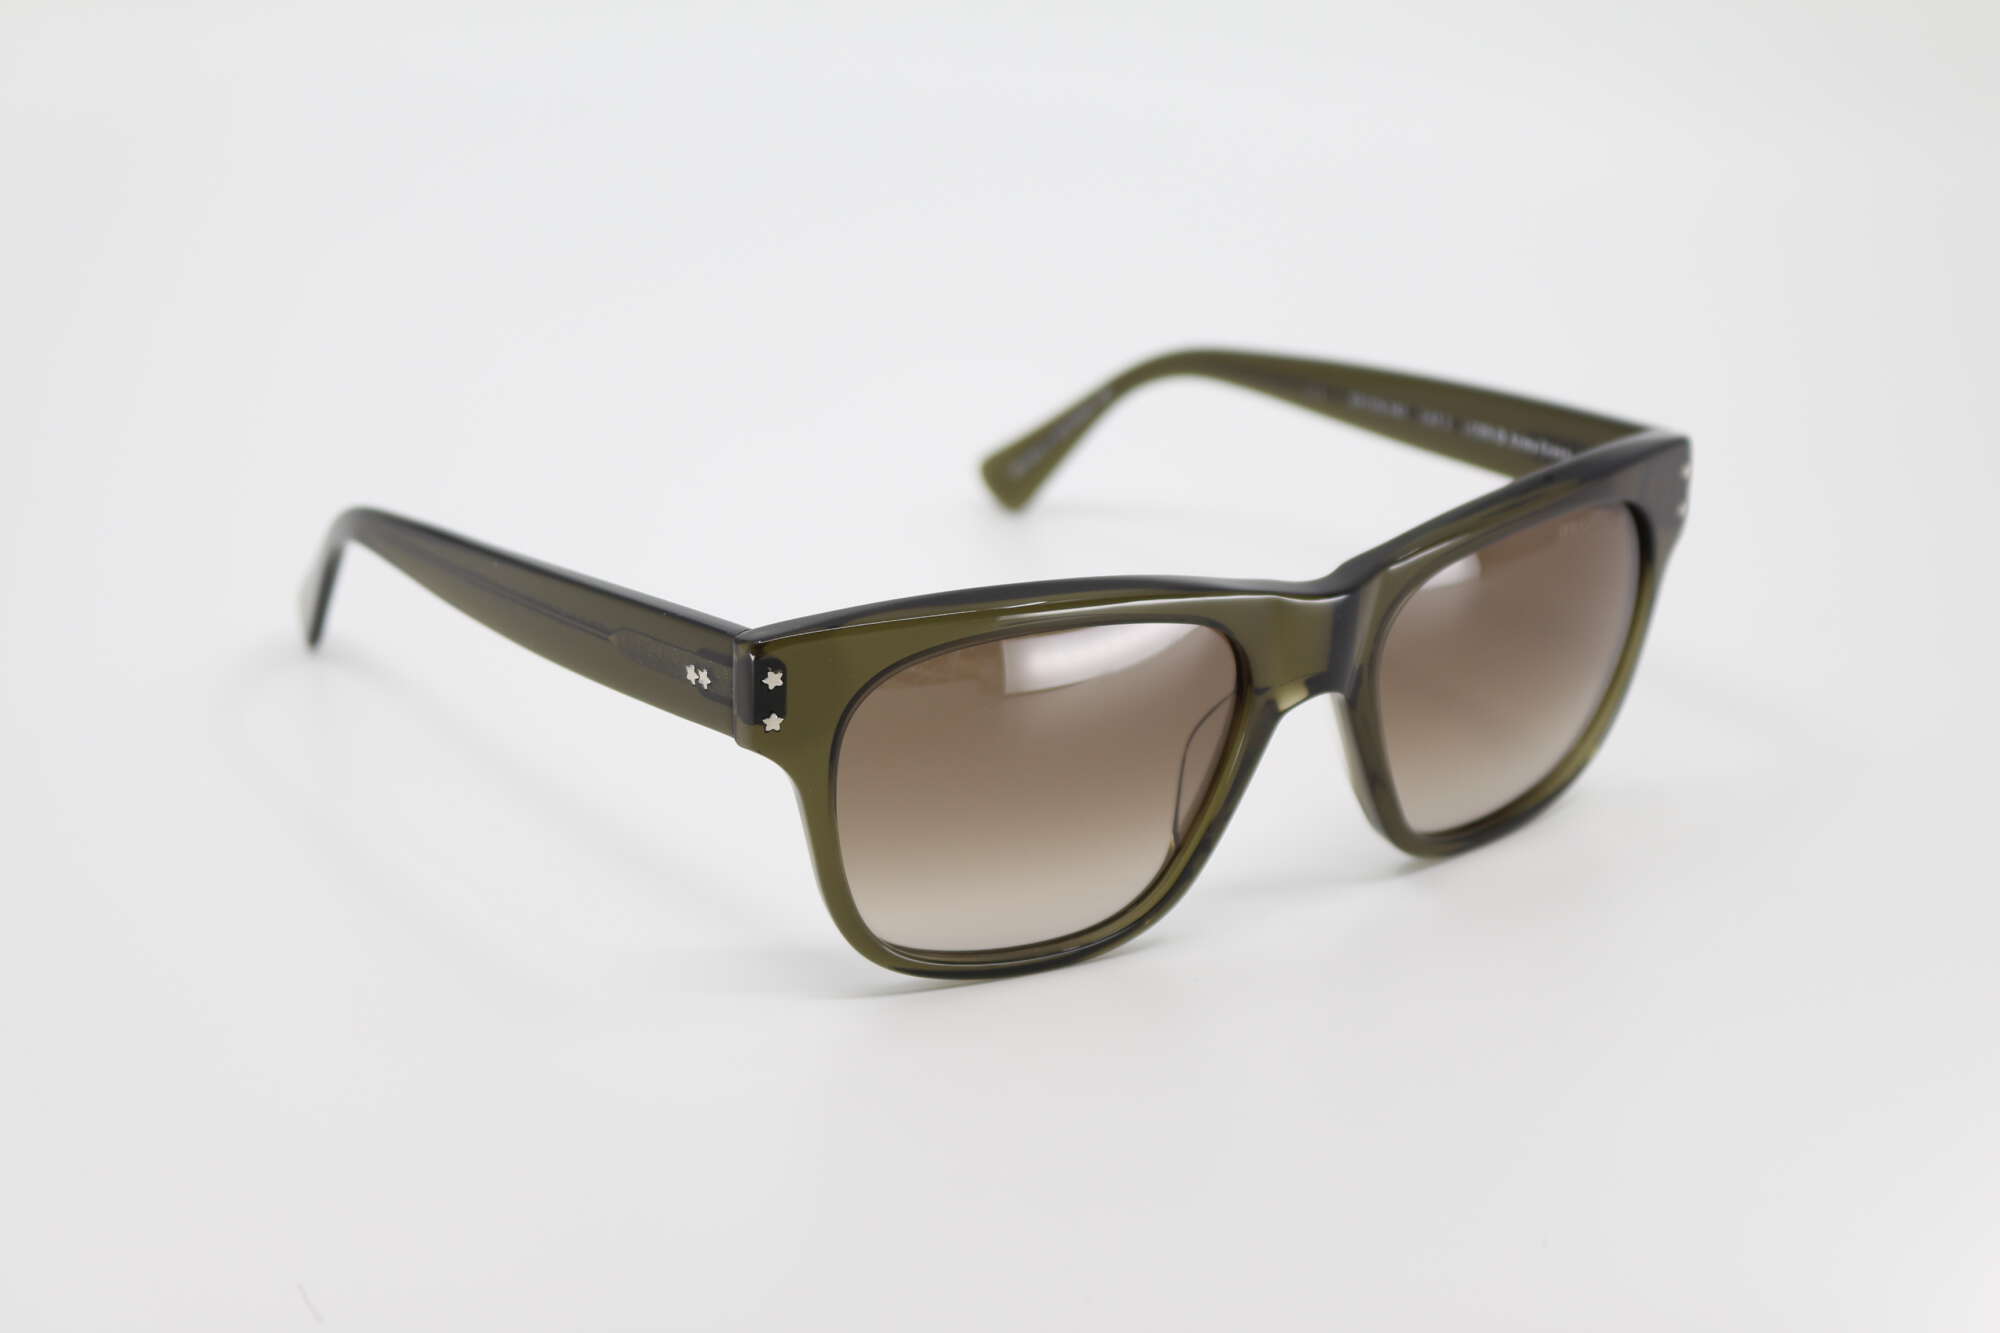 Oliver Goldsmith Sunglasses | Bronze Optical